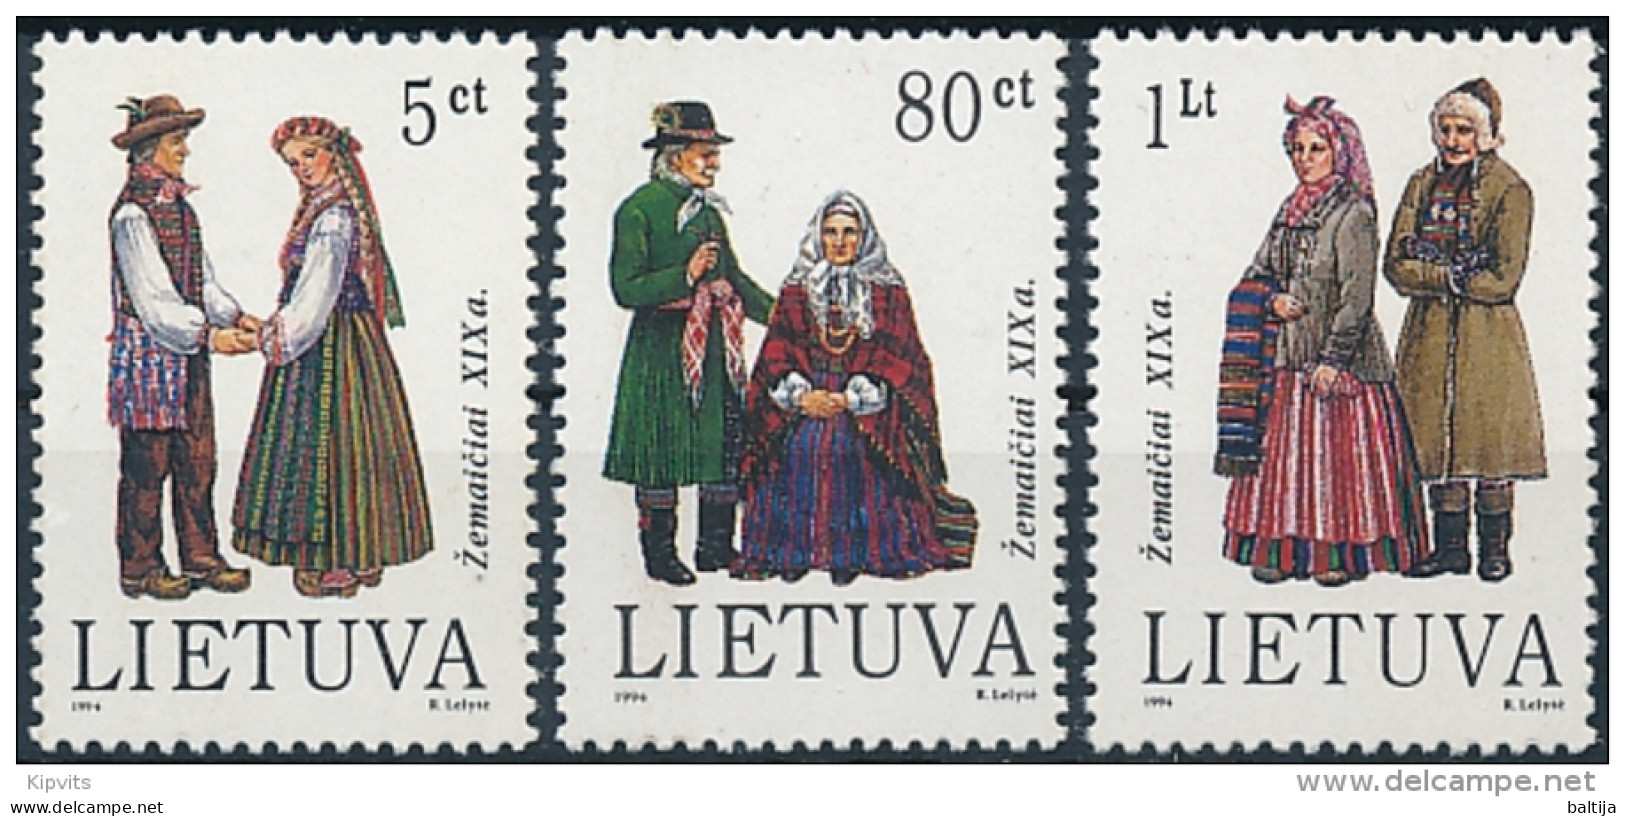 Mi 557-59 ** MNH Traditional Costumes - Lithuania